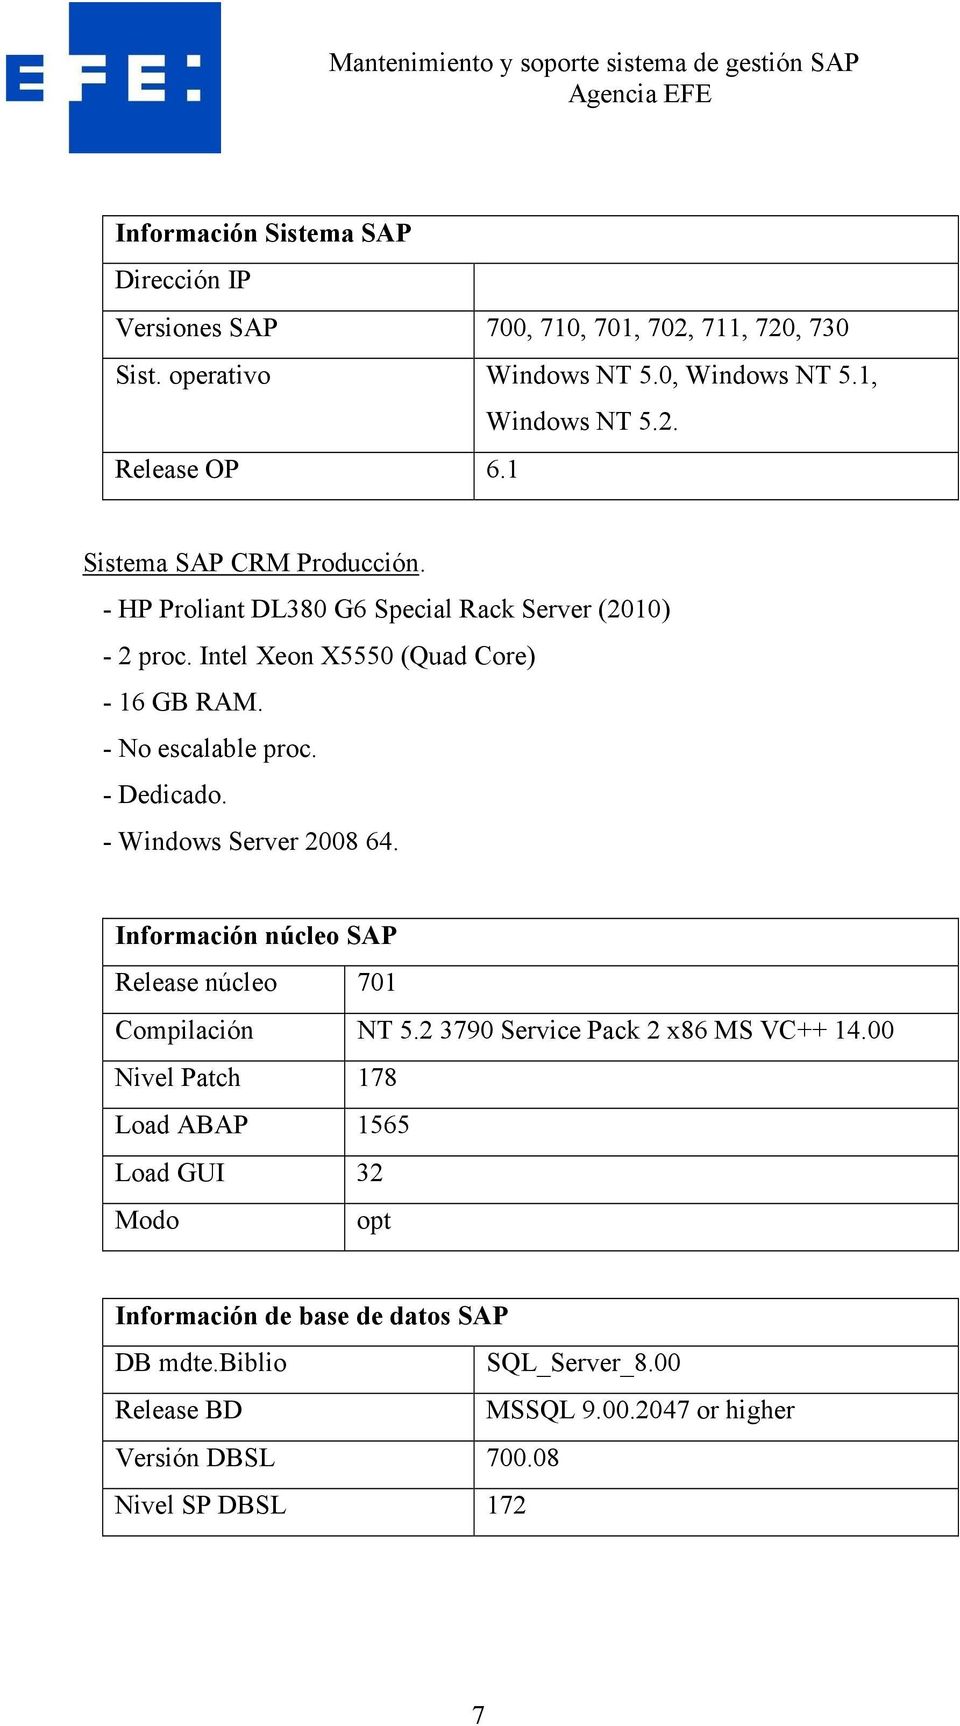 - Dedicado. - Windows Server 2008 64. Información núcleo SAP Release núcleo 701 Compilación NT 5.2 3790 Service Pack 2 x86 MS VC++ 14.